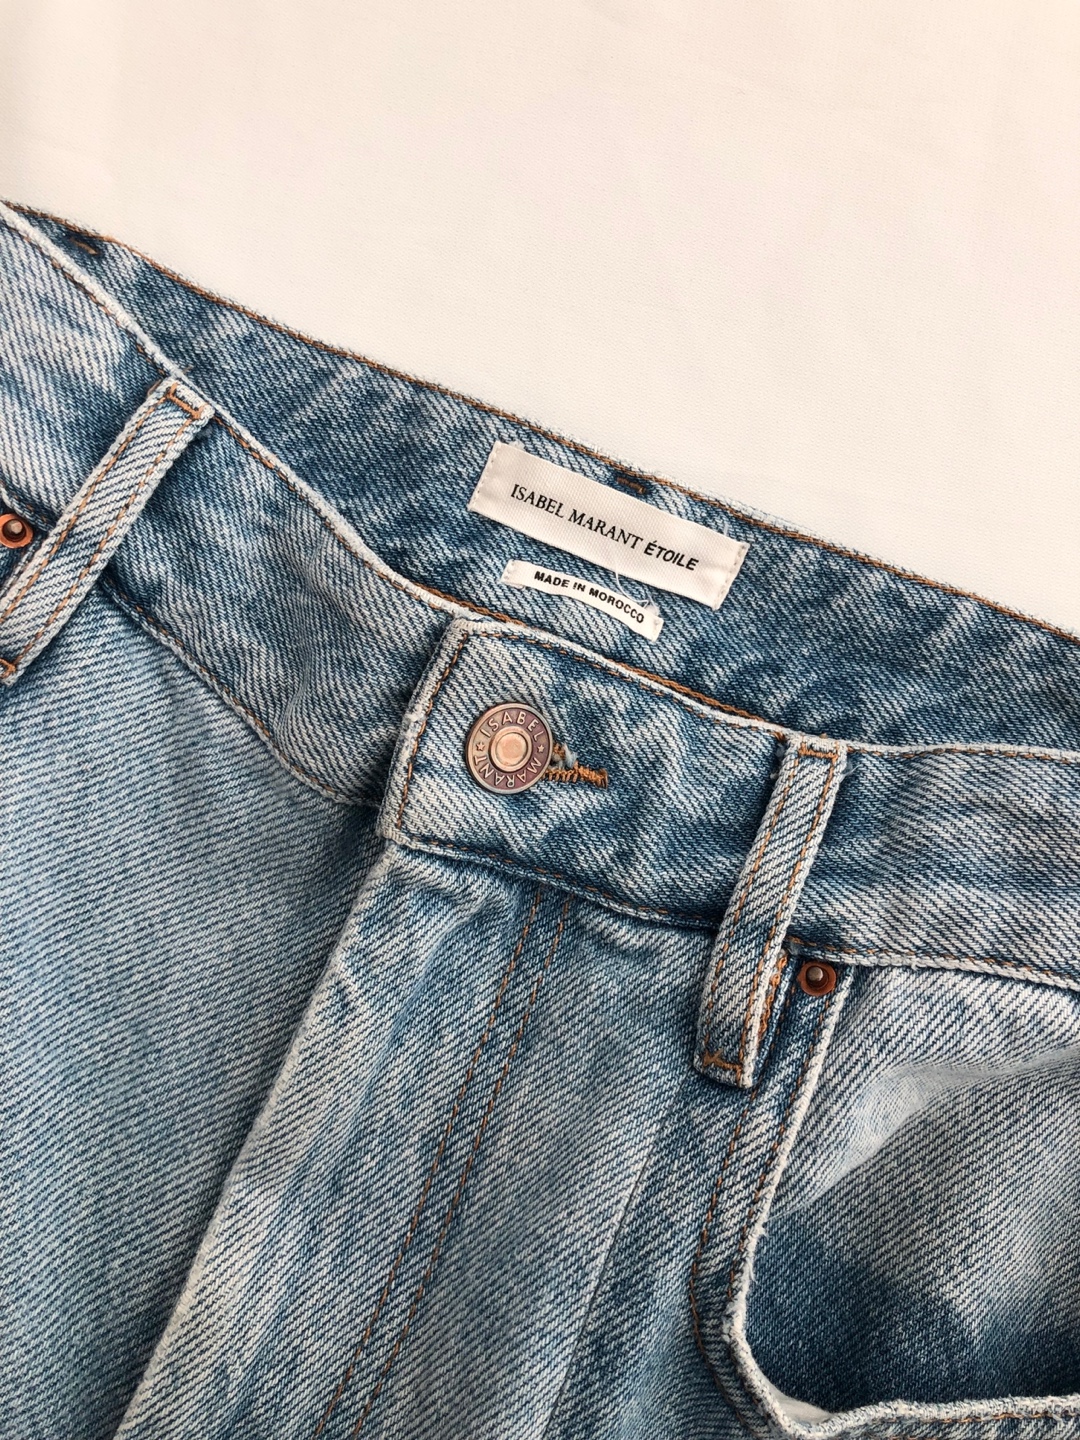 Isabel Marant blue light denim jeans [27-28 inch]